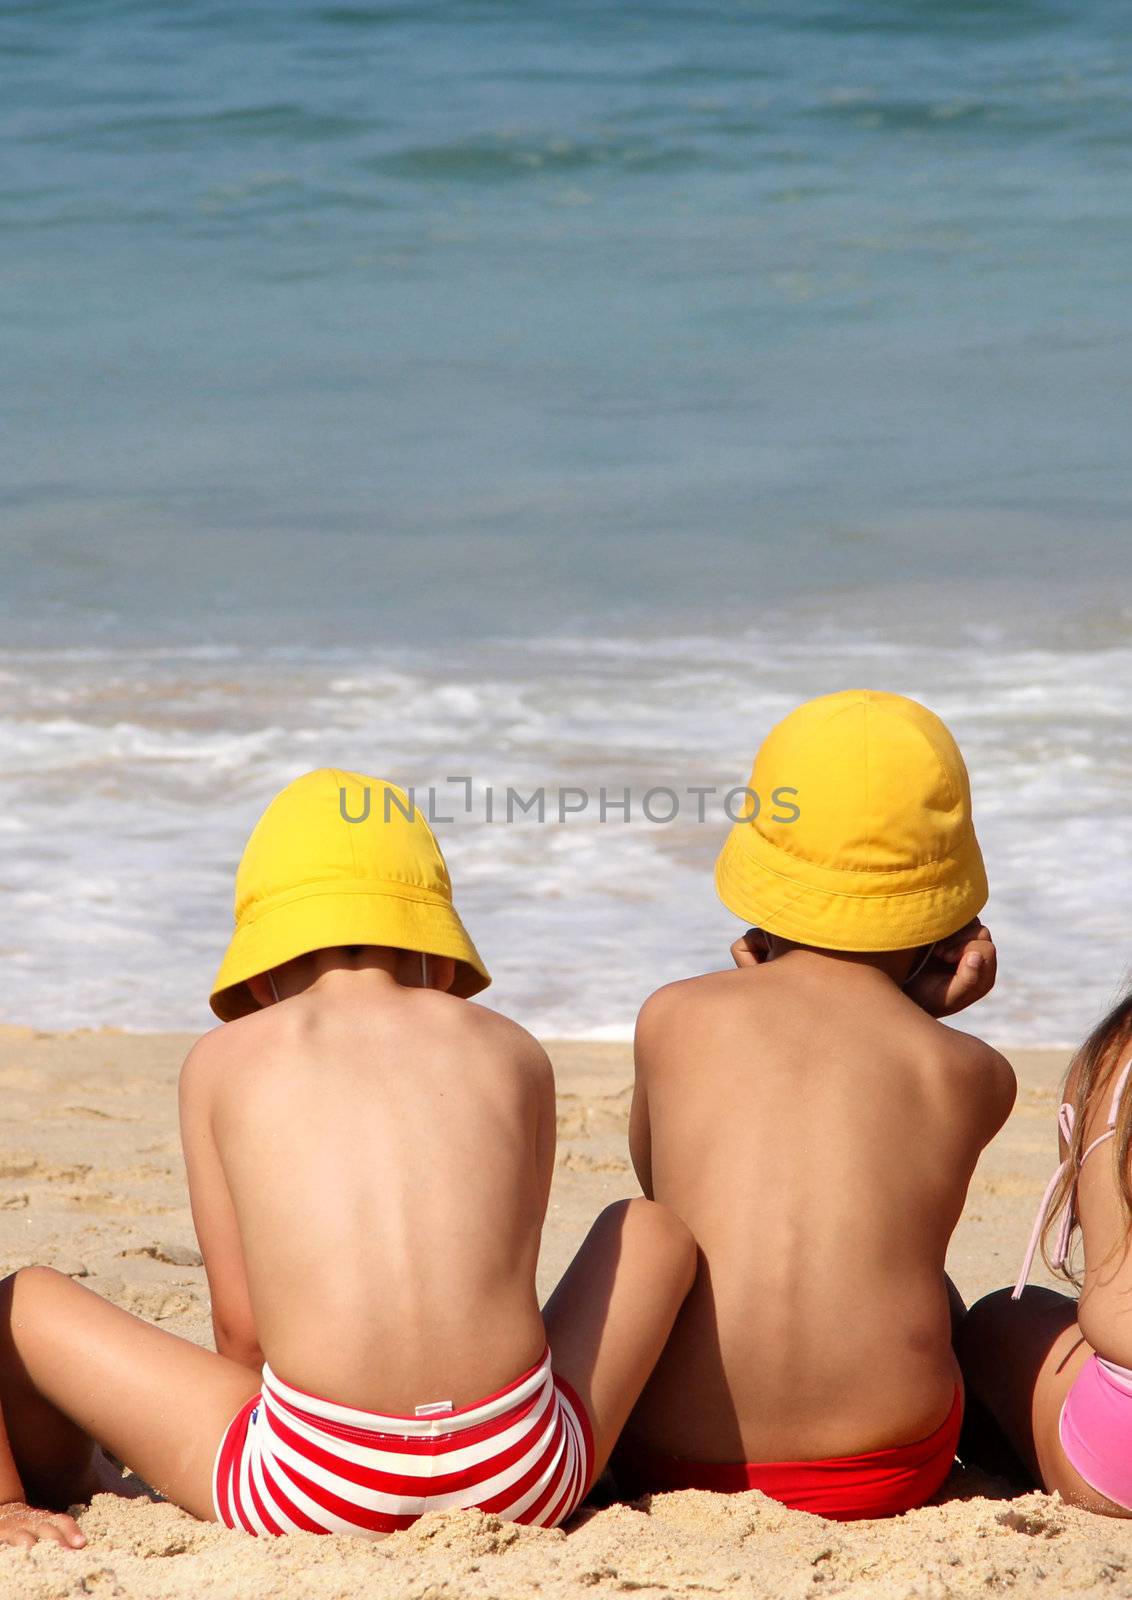 Cute small children on the beach by tanouchka